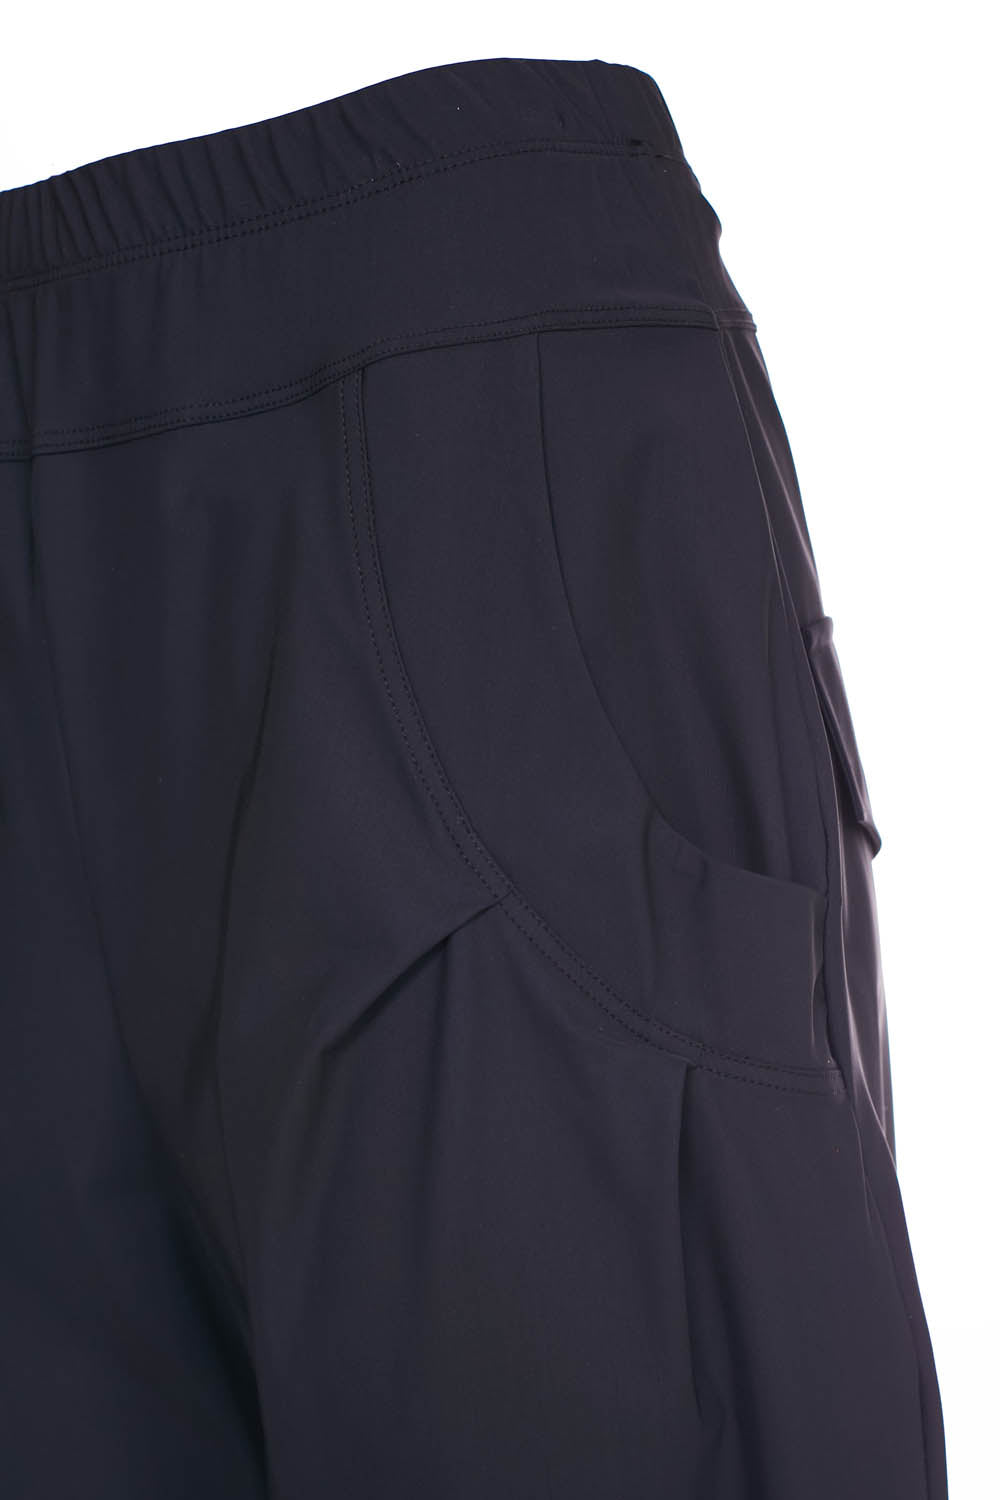 Naya NAW23101 Navy Travel Pants Cuffed Hem – Rouge Boutique Inverness